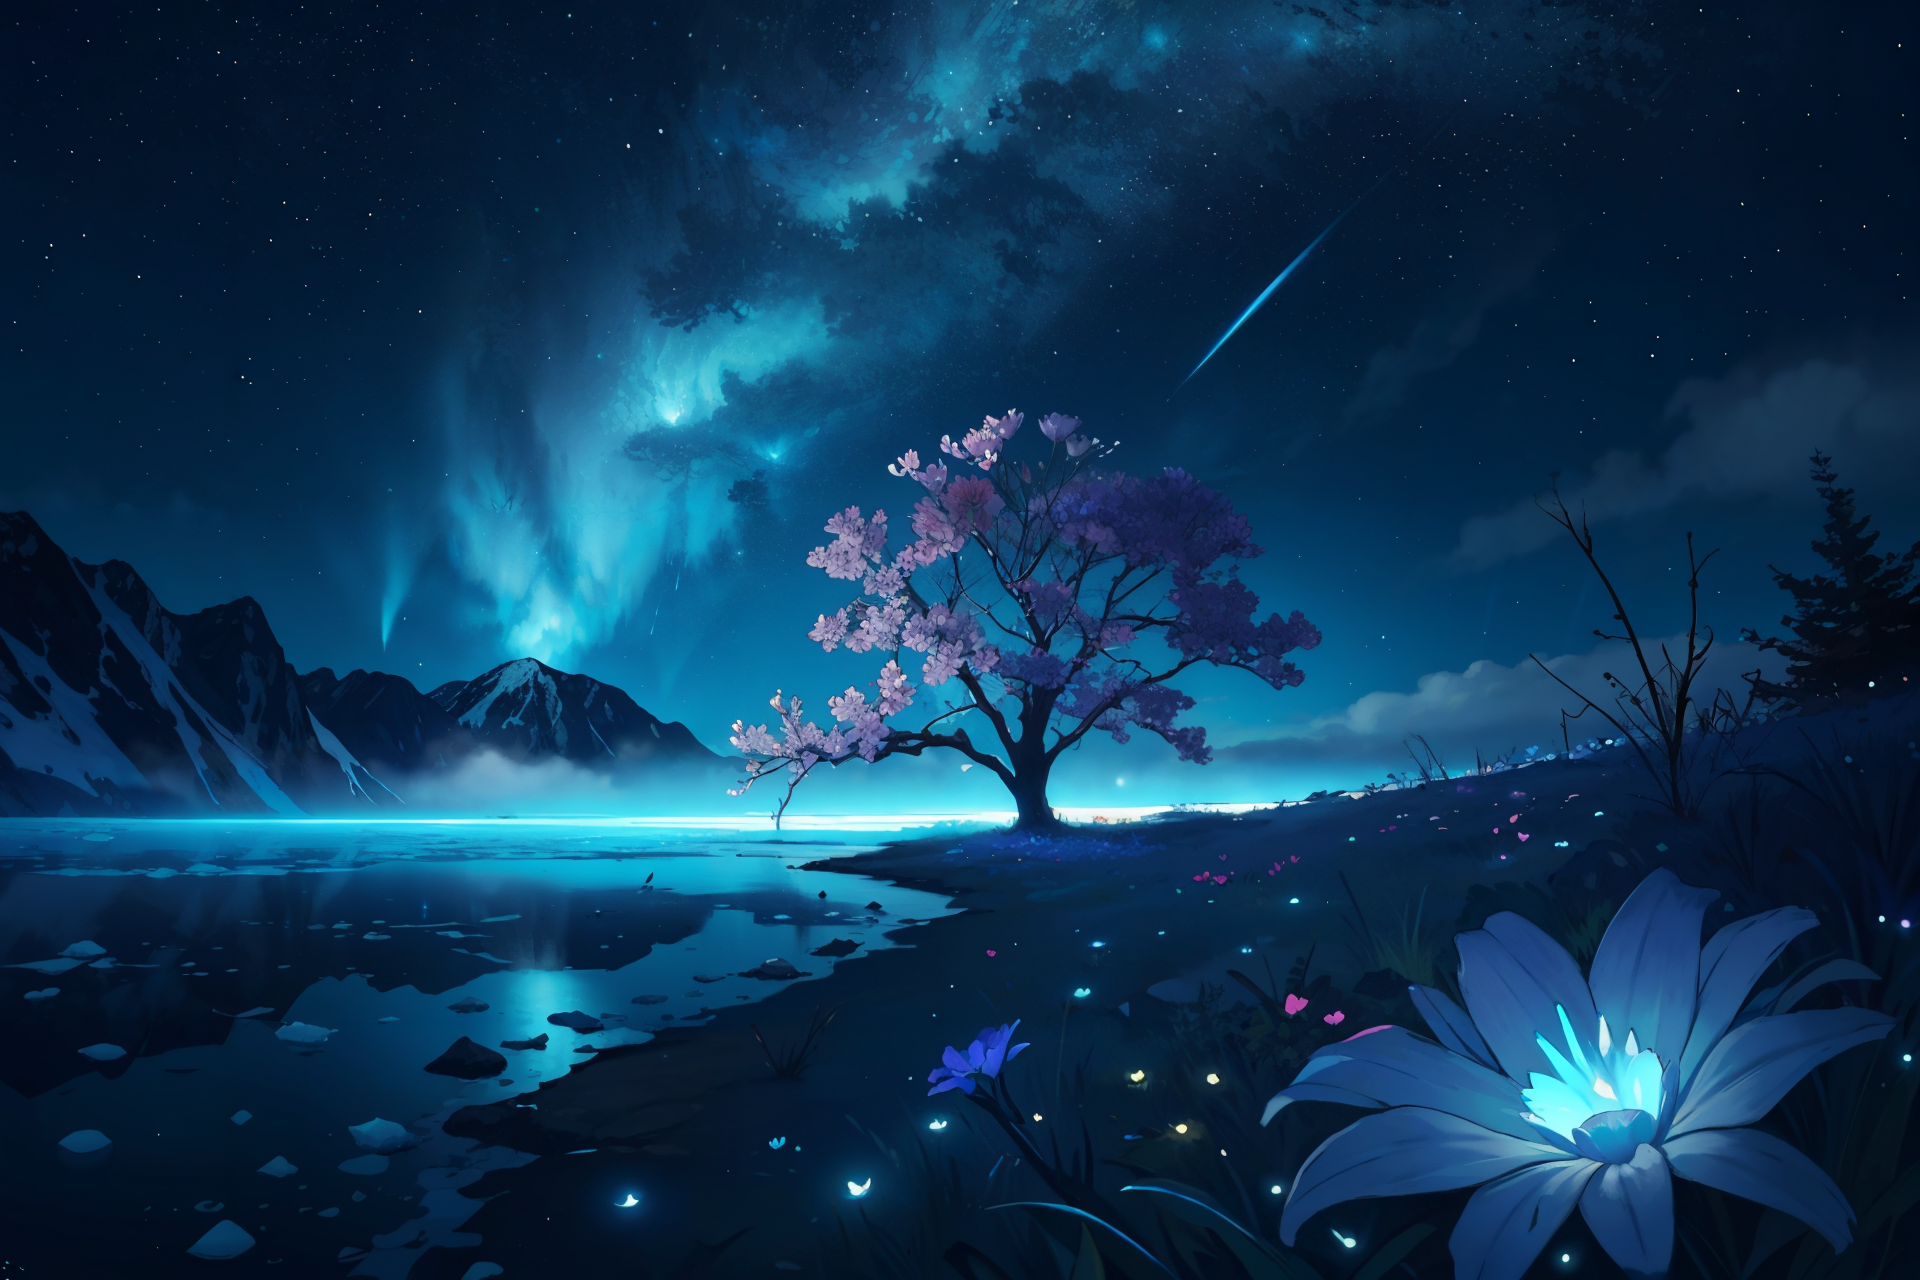 masterpiece, best quality, bioluminescence, icy, flowers, fog, lone tree, night sky